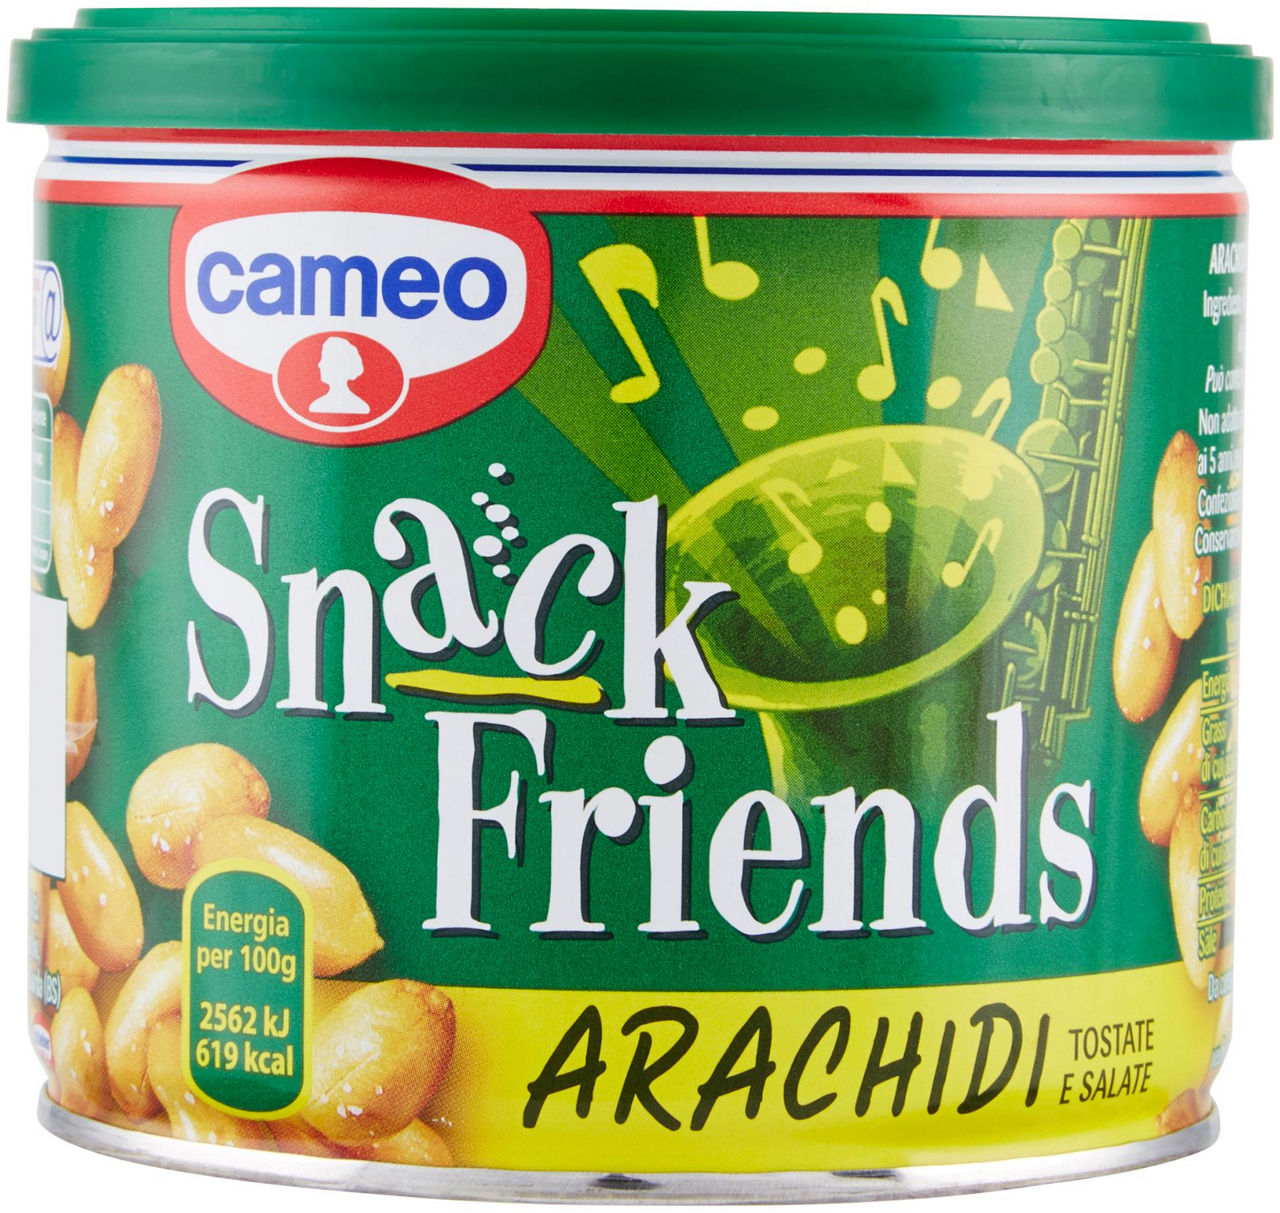 Arachidi cameo snack friends tostate e salate lattina g 200